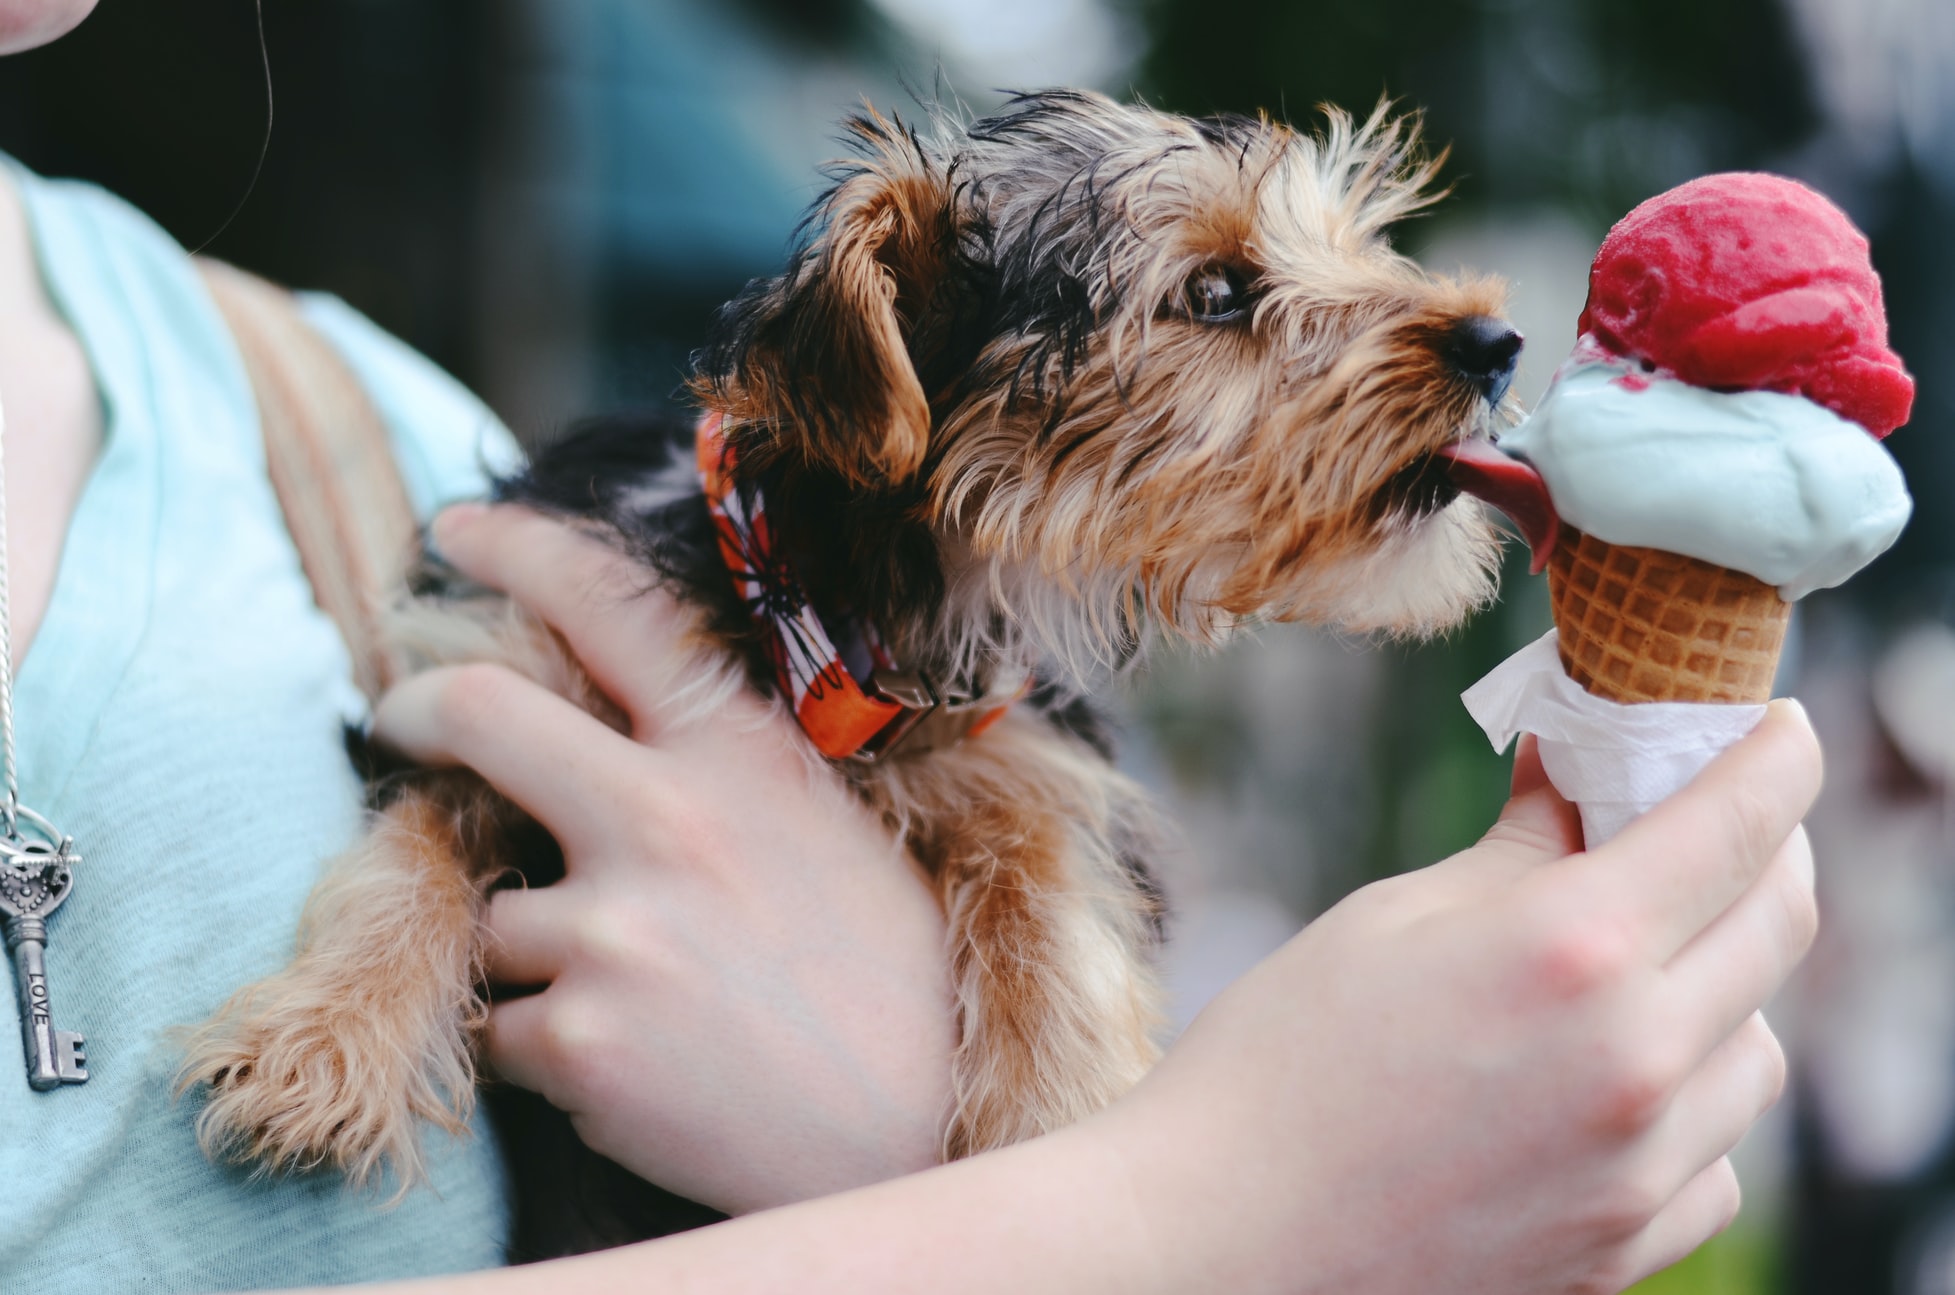 a dog licking an ice-cream cone